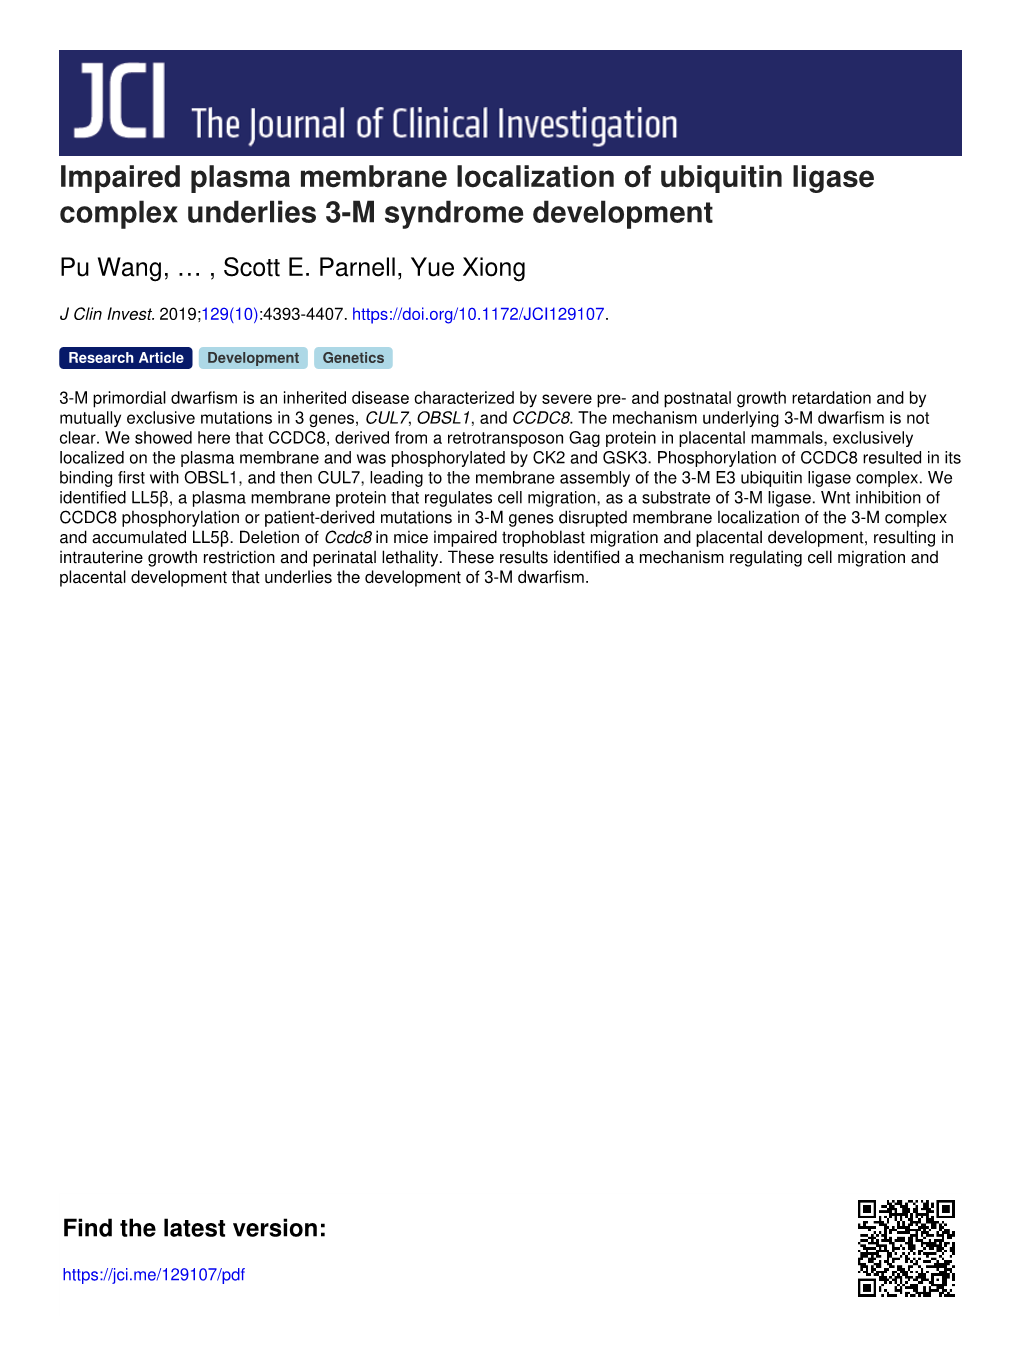 Impaired Plasma Membrane Localization of Ubiquitin Ligase Complex Underlies 3-M Syndrome Development